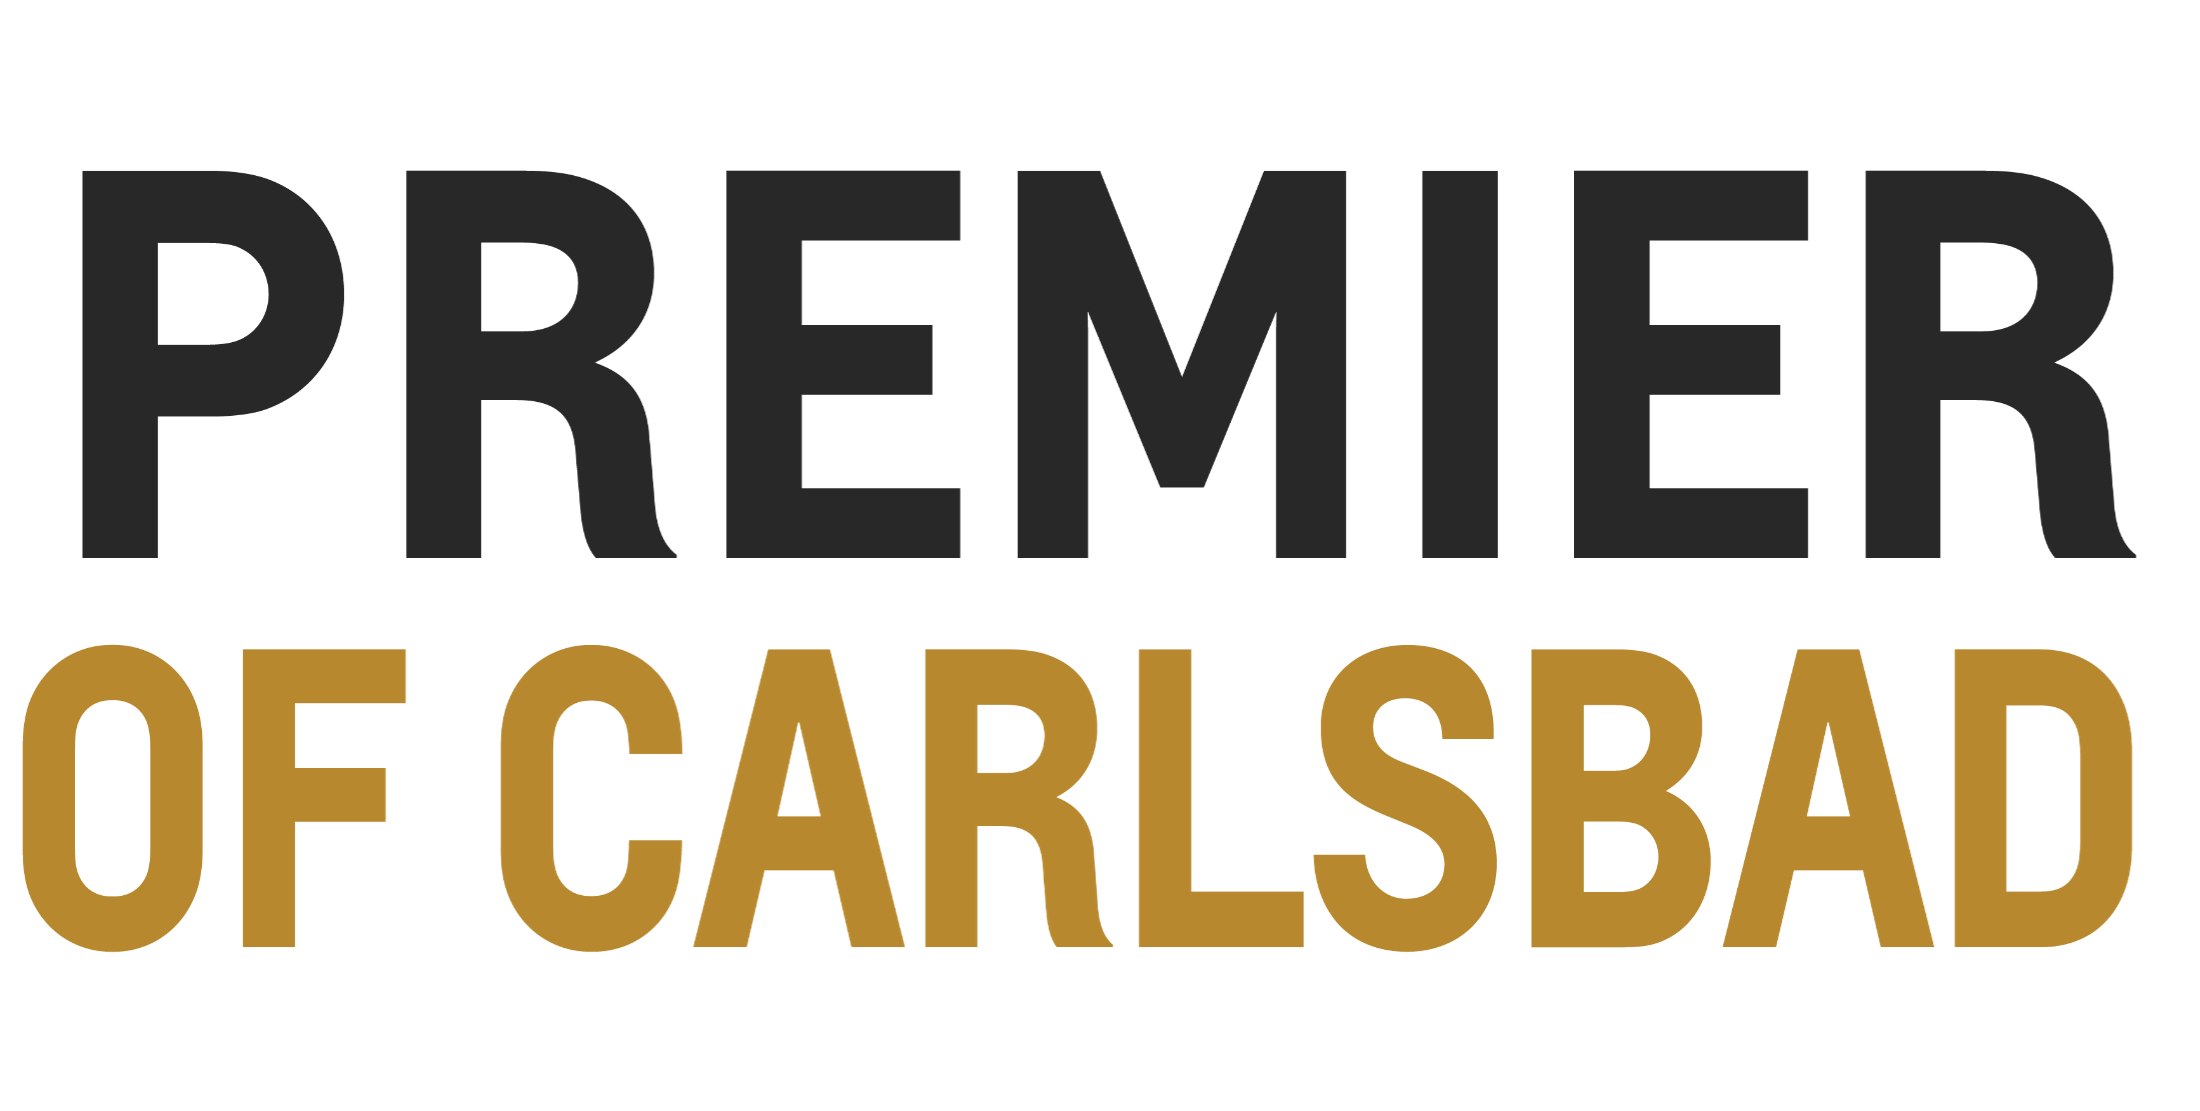 Premier Chevrolet of Carlsbad